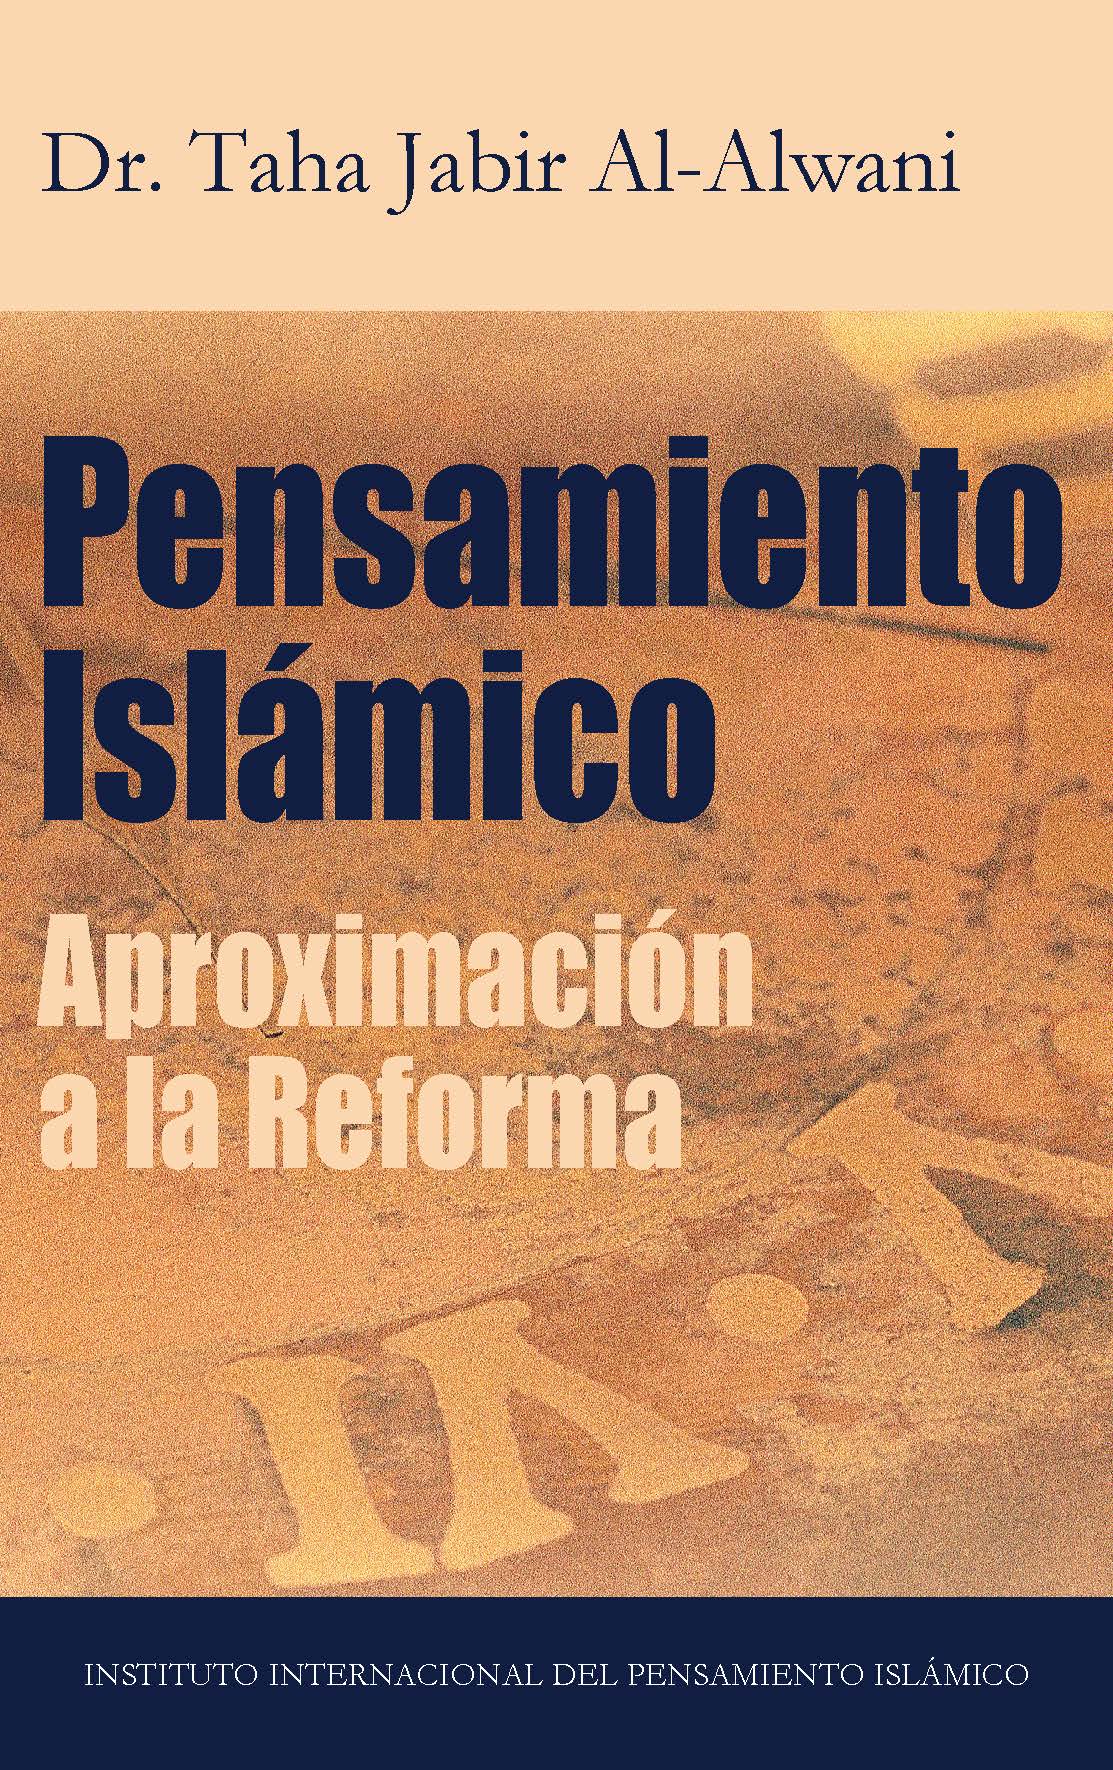 Spanish (Latin): Pensamiento islámico: Aproximación a la reforma (Islamic Thought: An Approach to Reform)